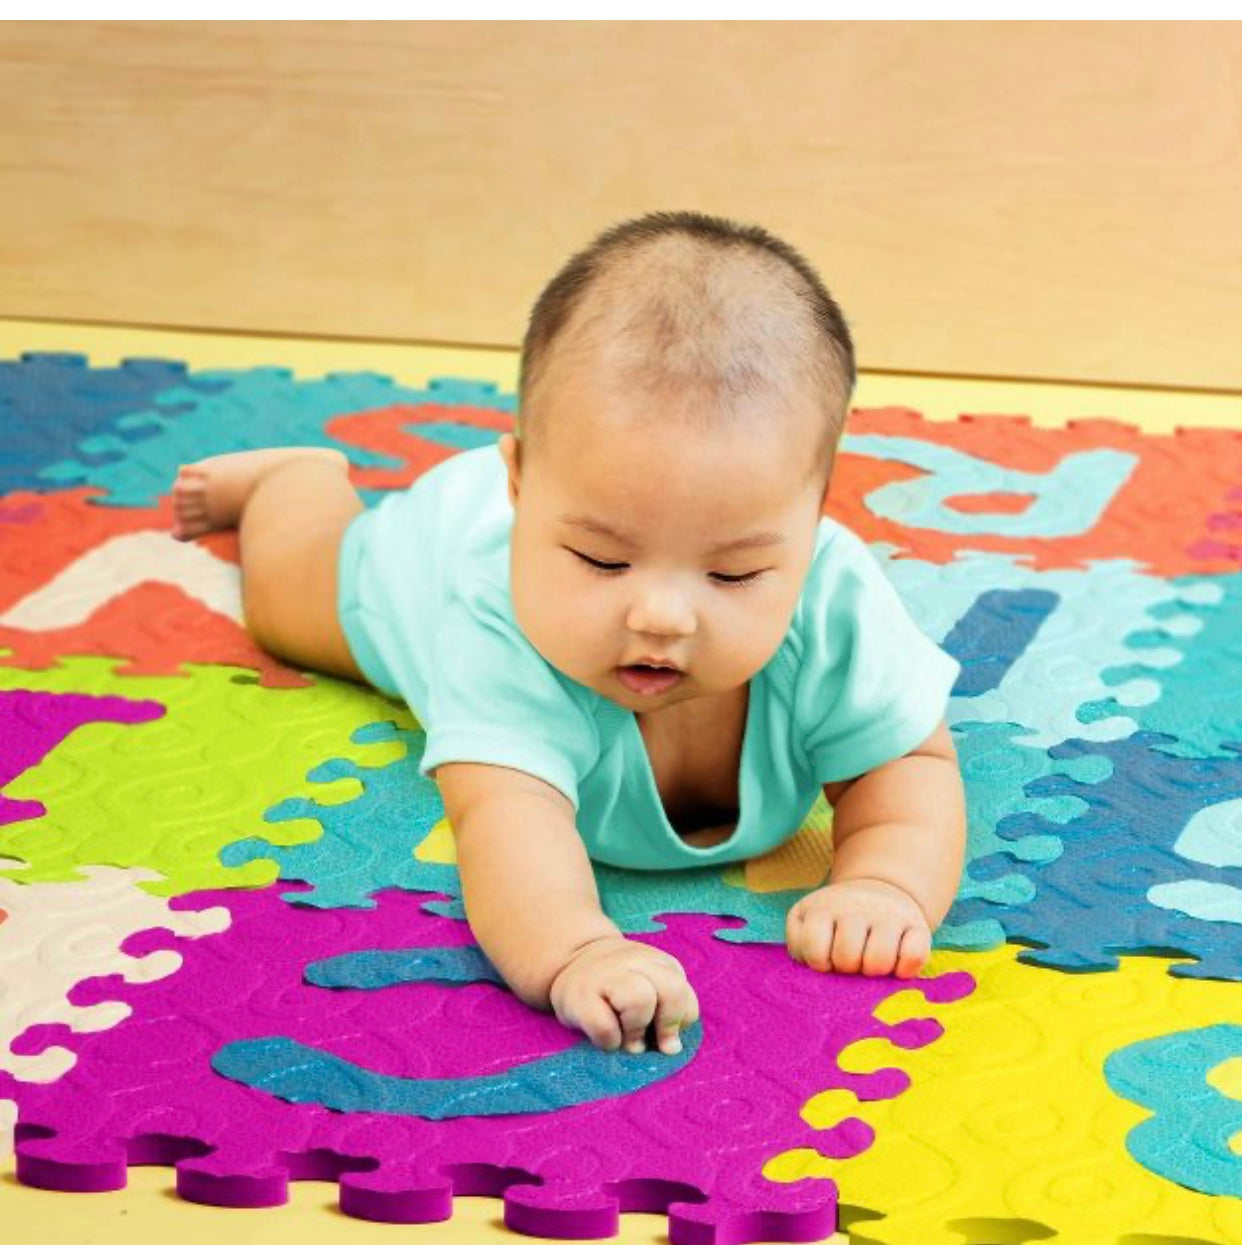 Baby play mat